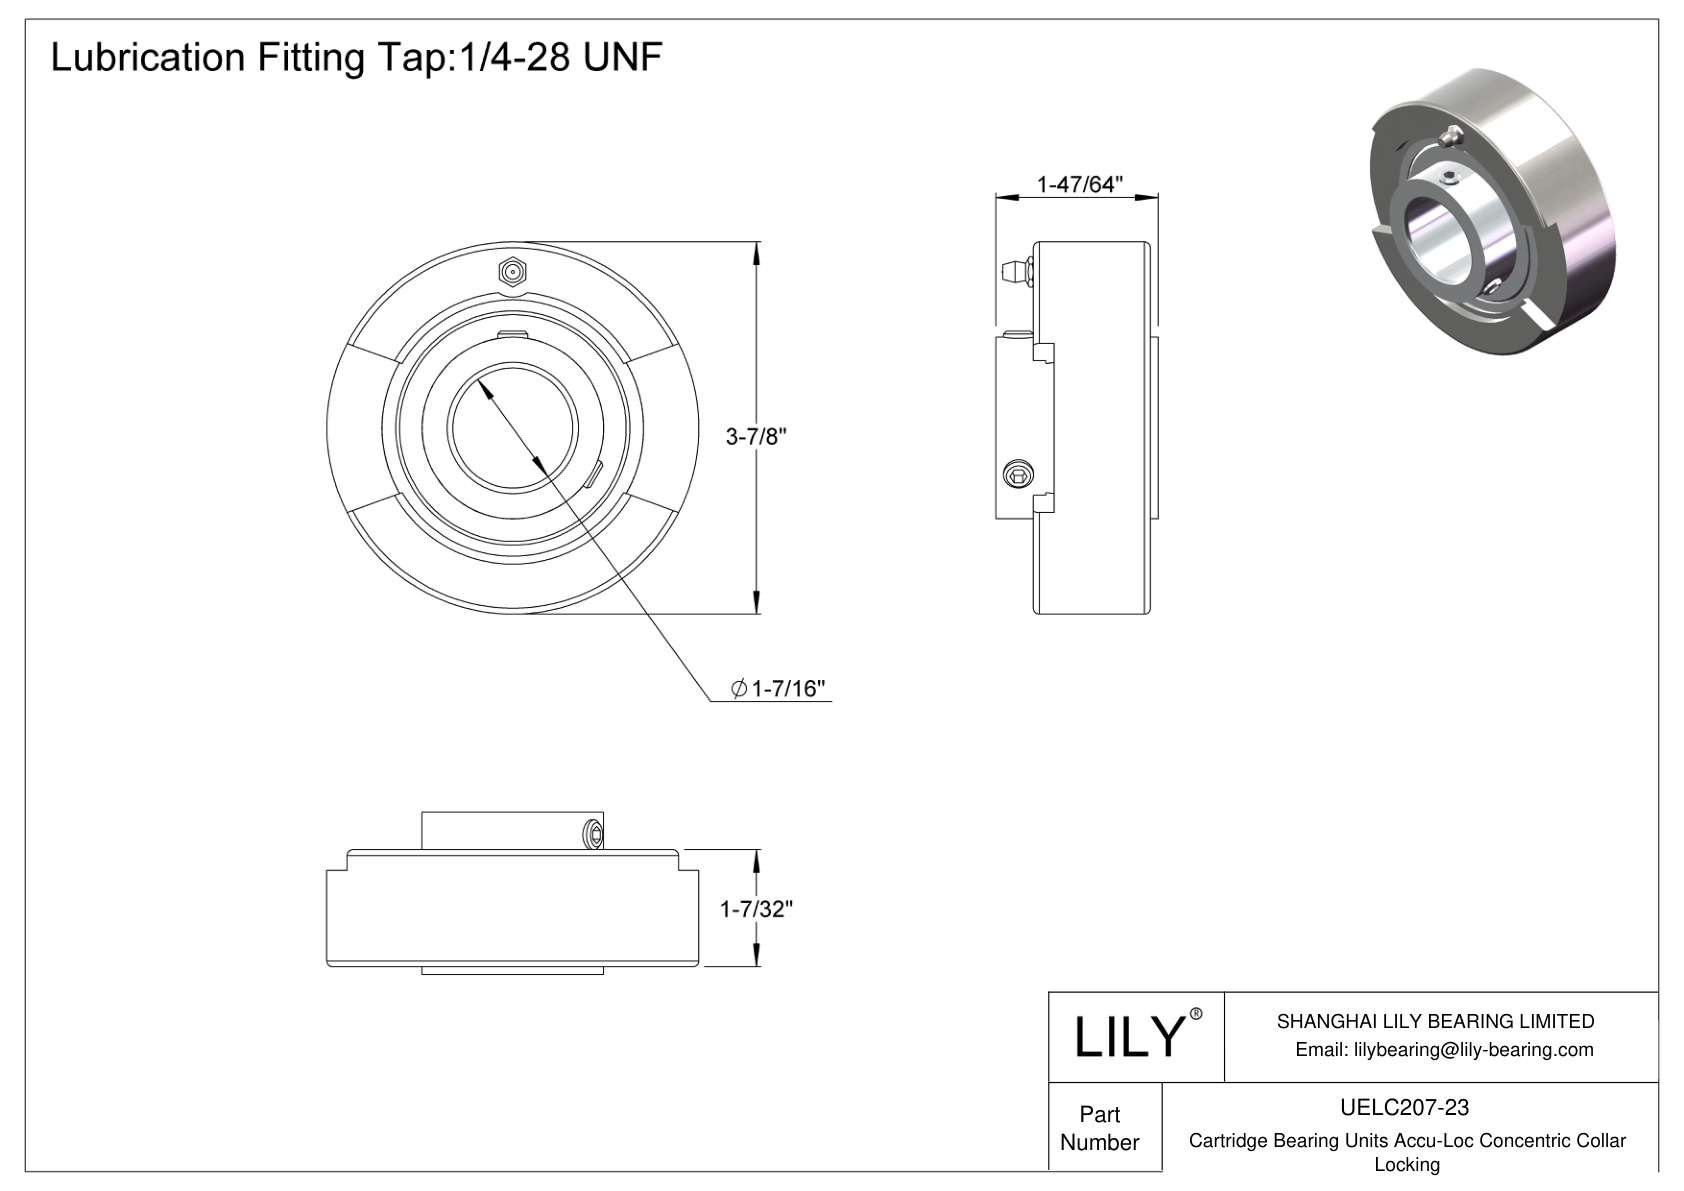 UELC207-23 Cartridge Bearing Units Accu-Loc Concentric Collar Locking cad drawing